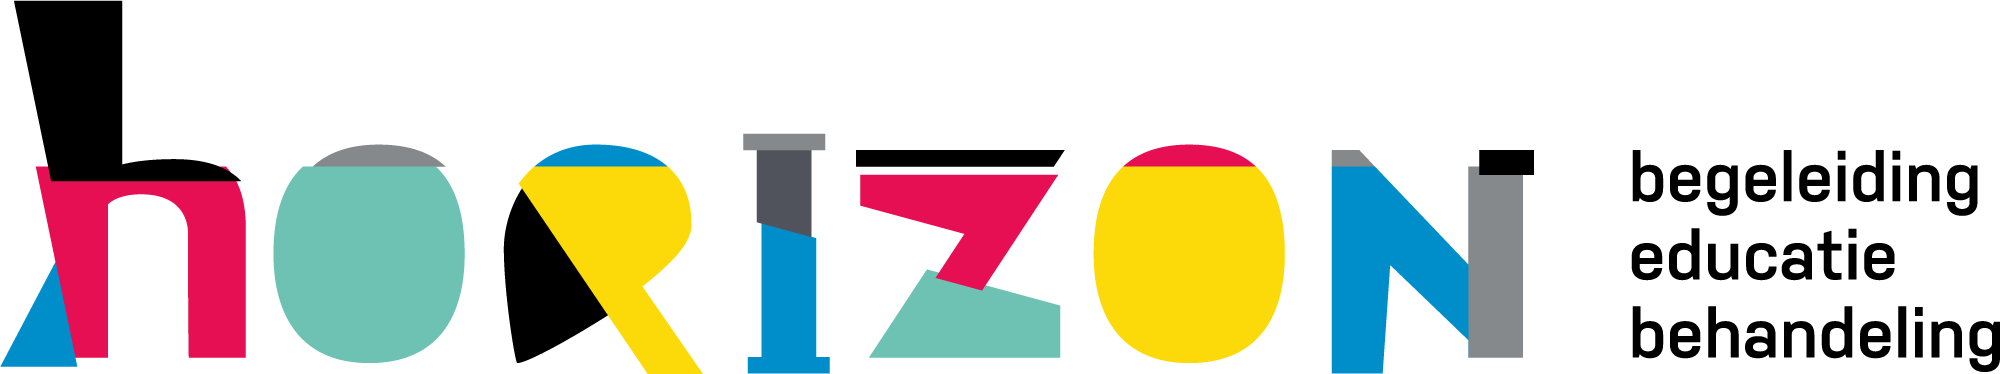 Horizon begeleiding logo